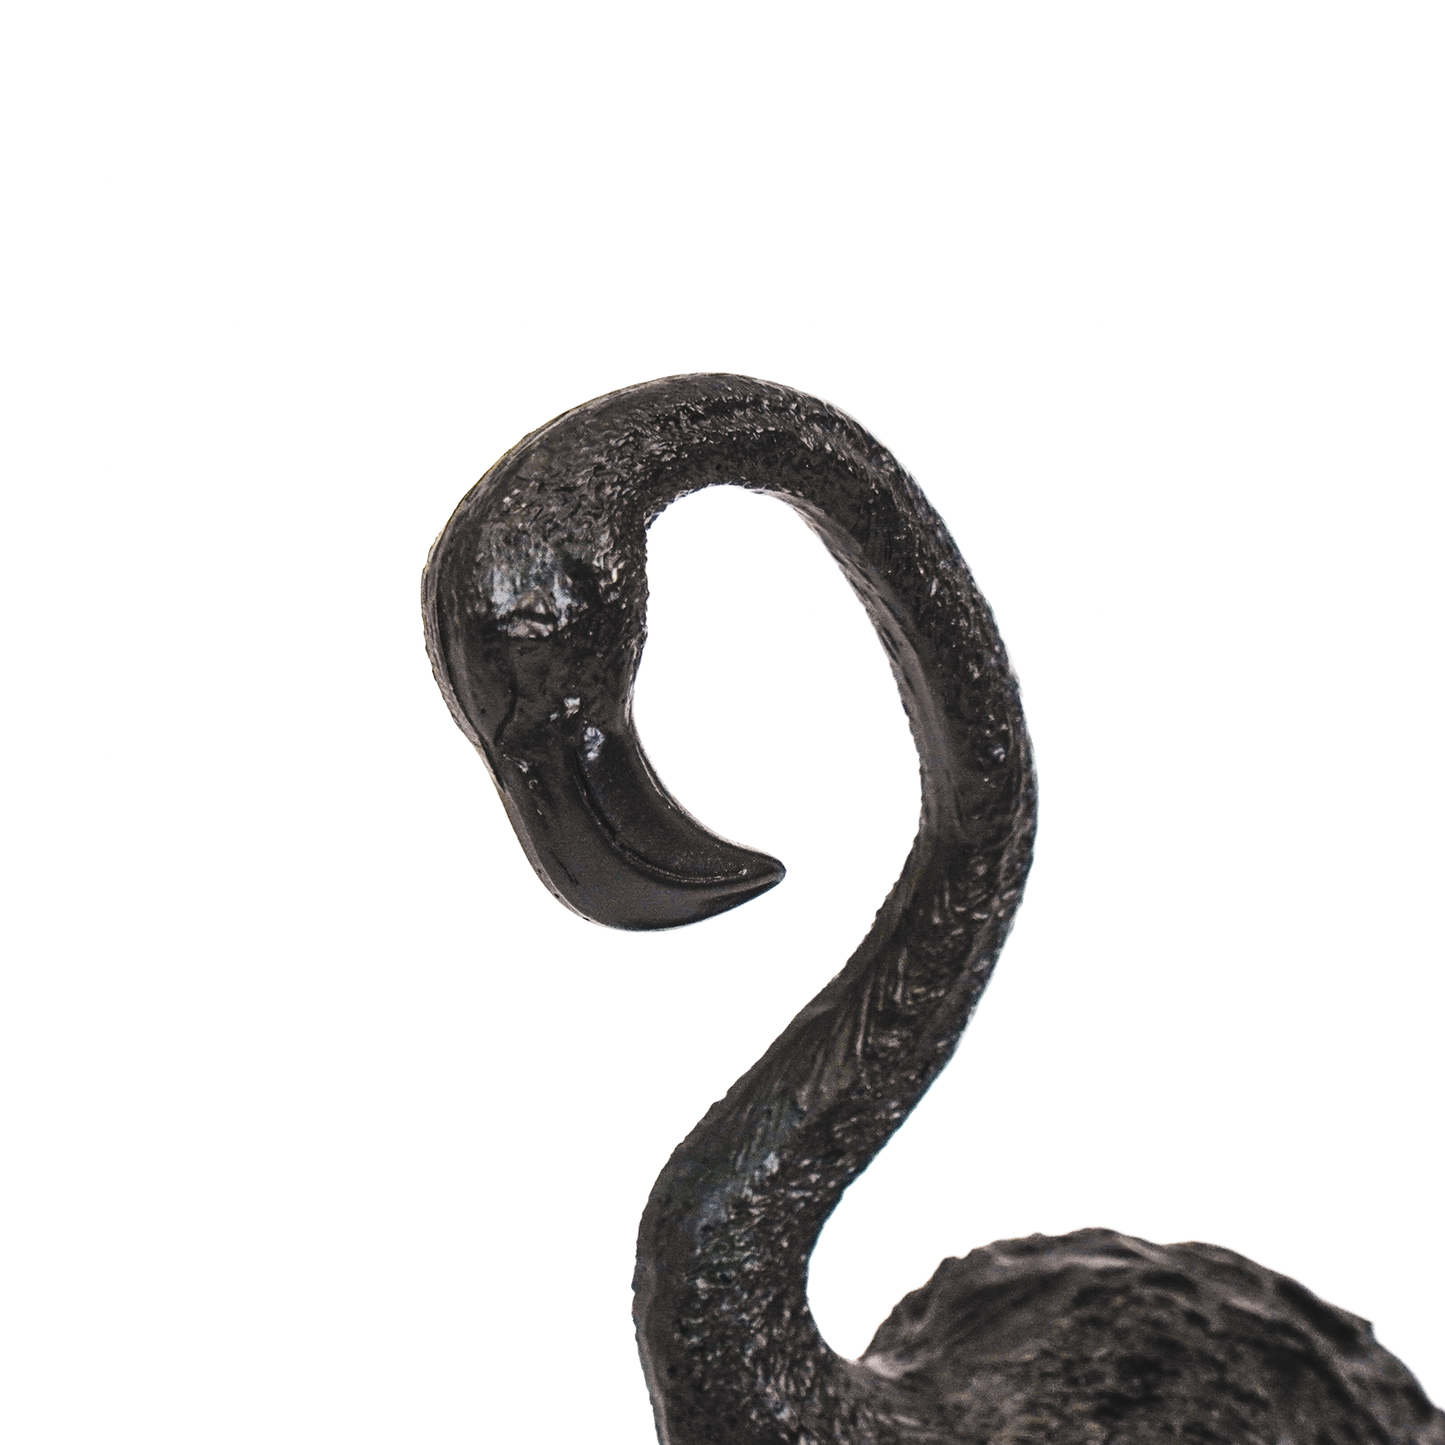 Housevitamin Flamingo Black - 9x7,5x19,5cm